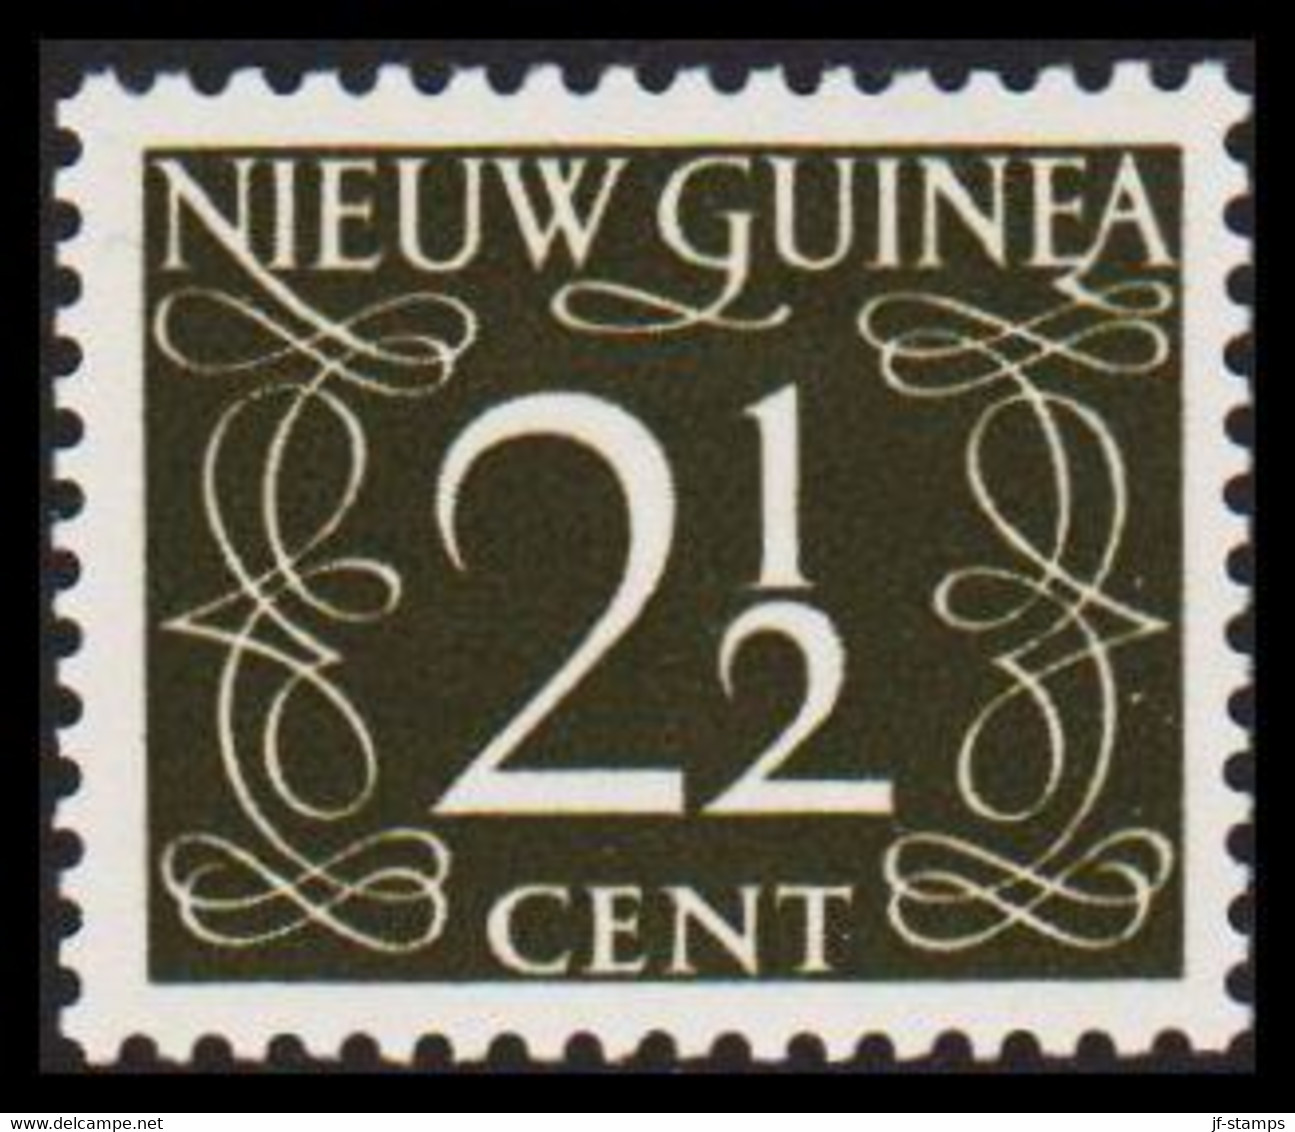 1950. NIEUW GUINEA. Nummerals- Type 2½ CENT Hinged.  - JF529320 - Nuova Guinea Olandese